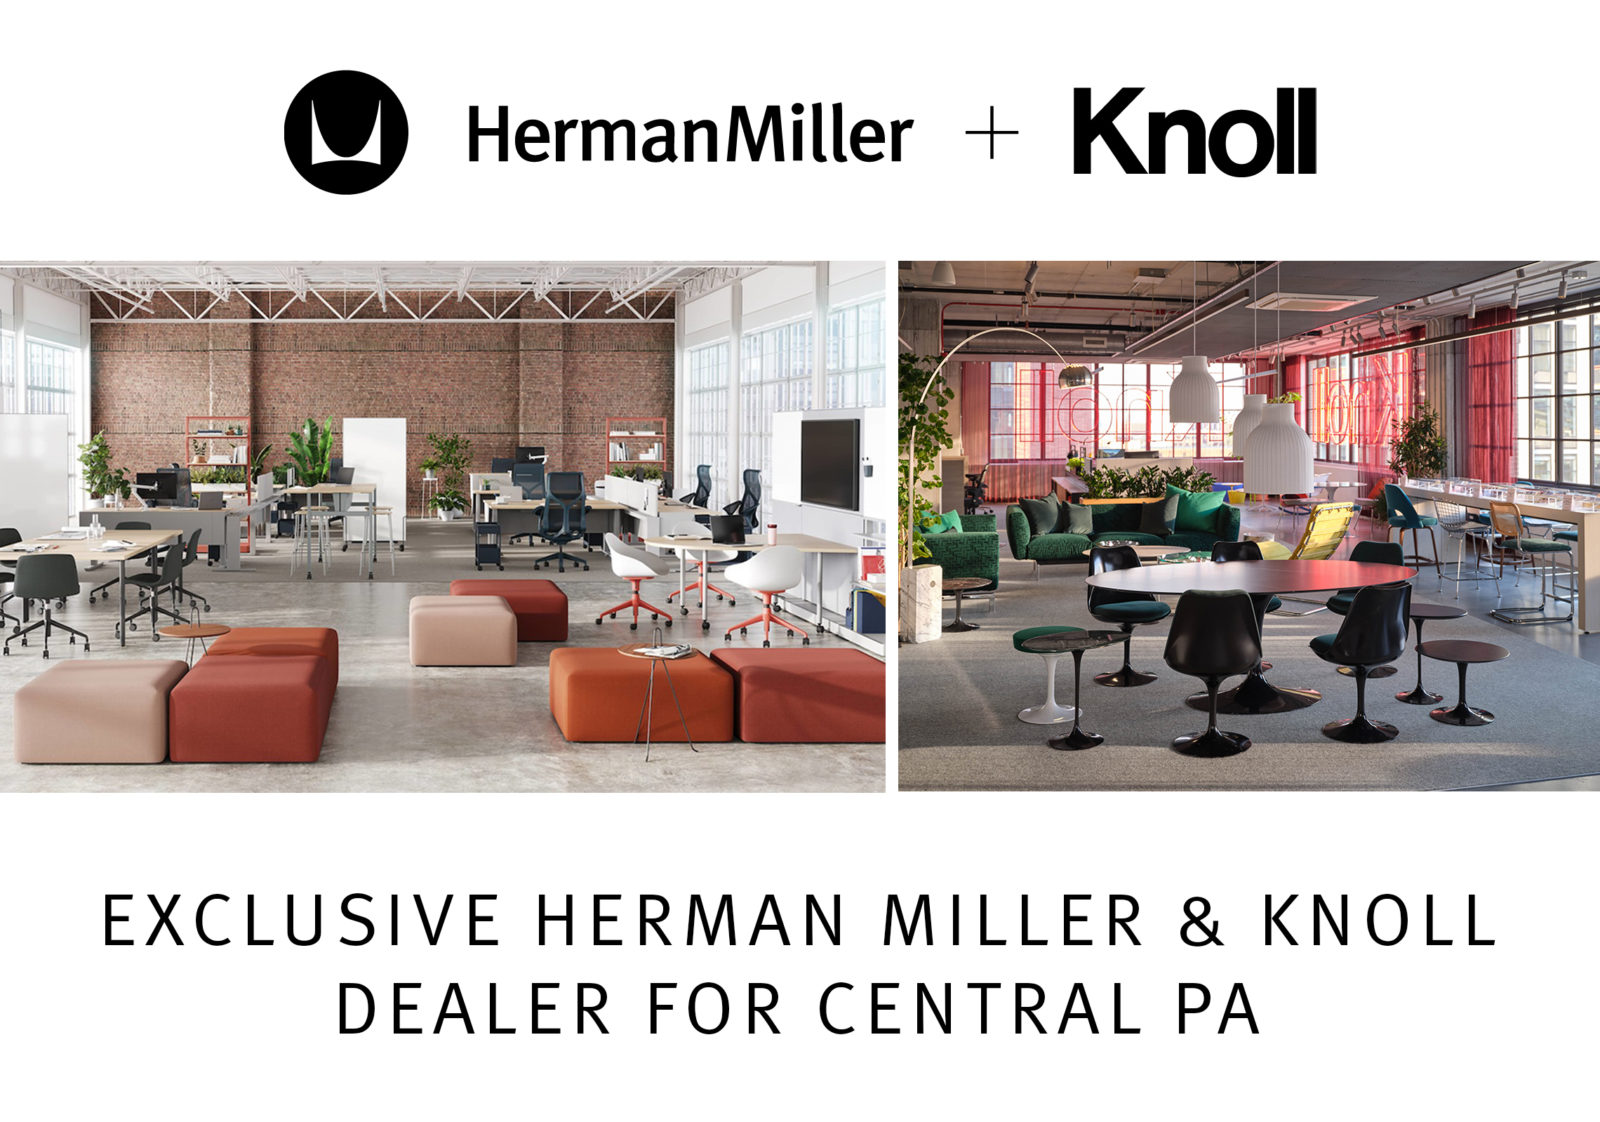 Herman Miller and Knoll logos together, setting of Herman Miller furniture in image on left, setting of Knoll furniture in image on right